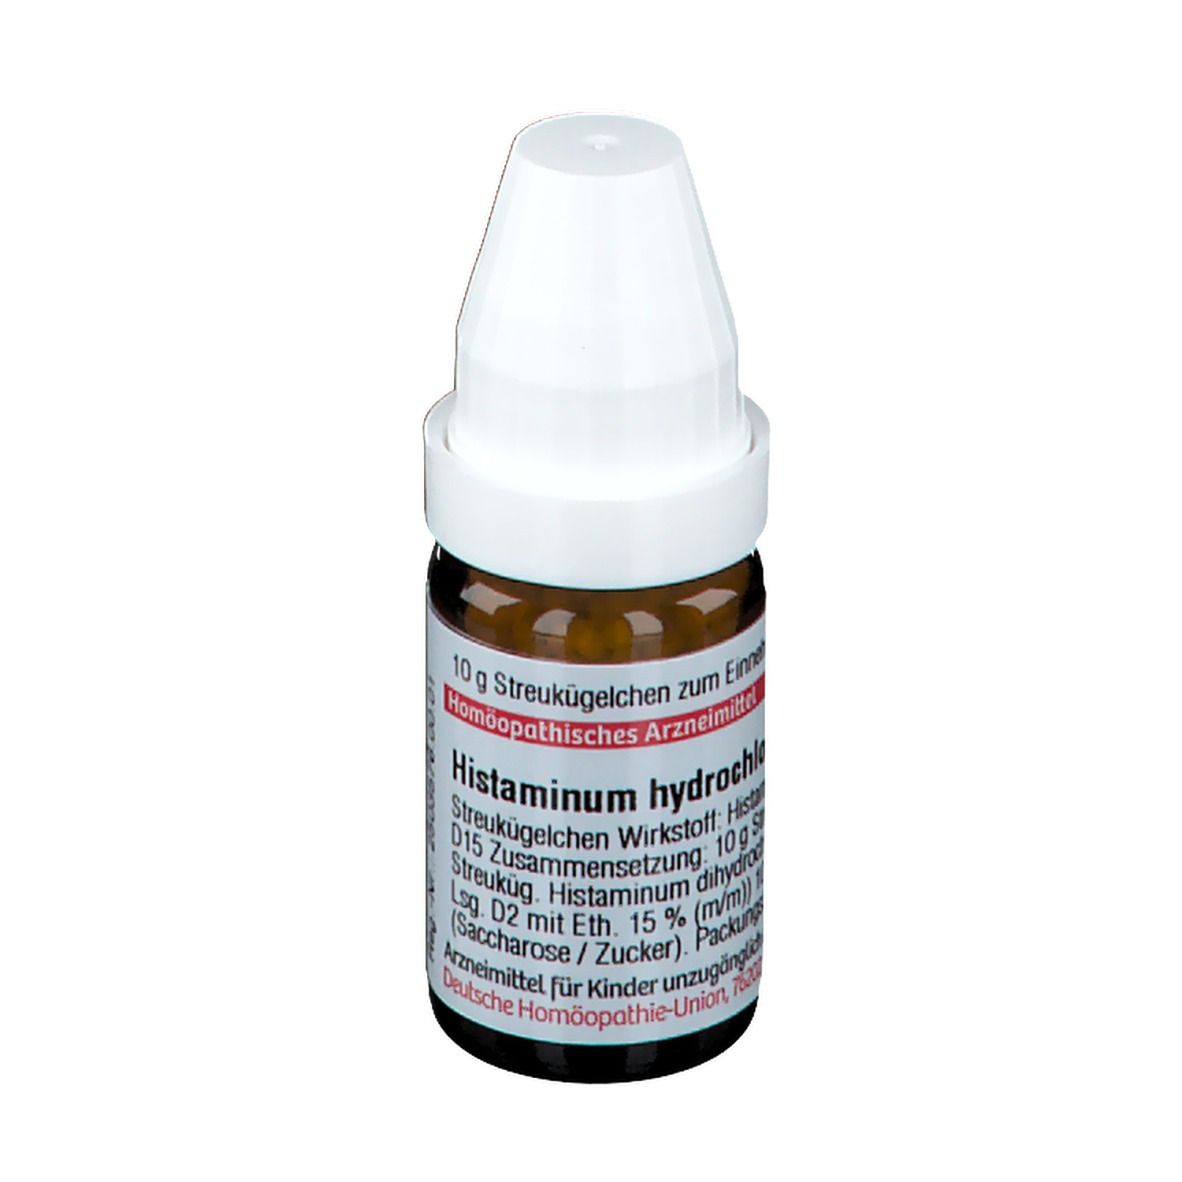 DHU Histaminum Hydrochloricum D15